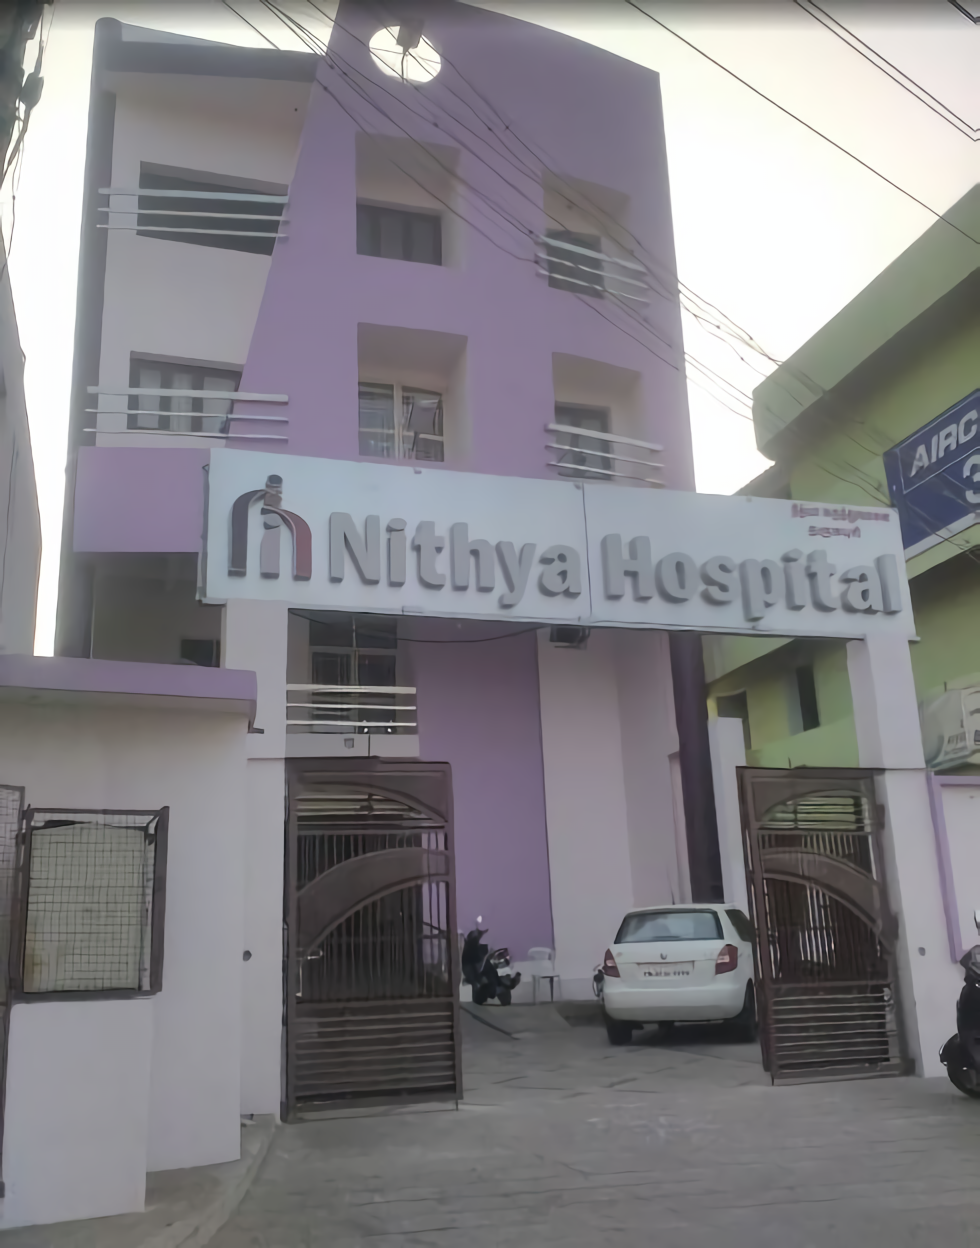 Nithya Hospital